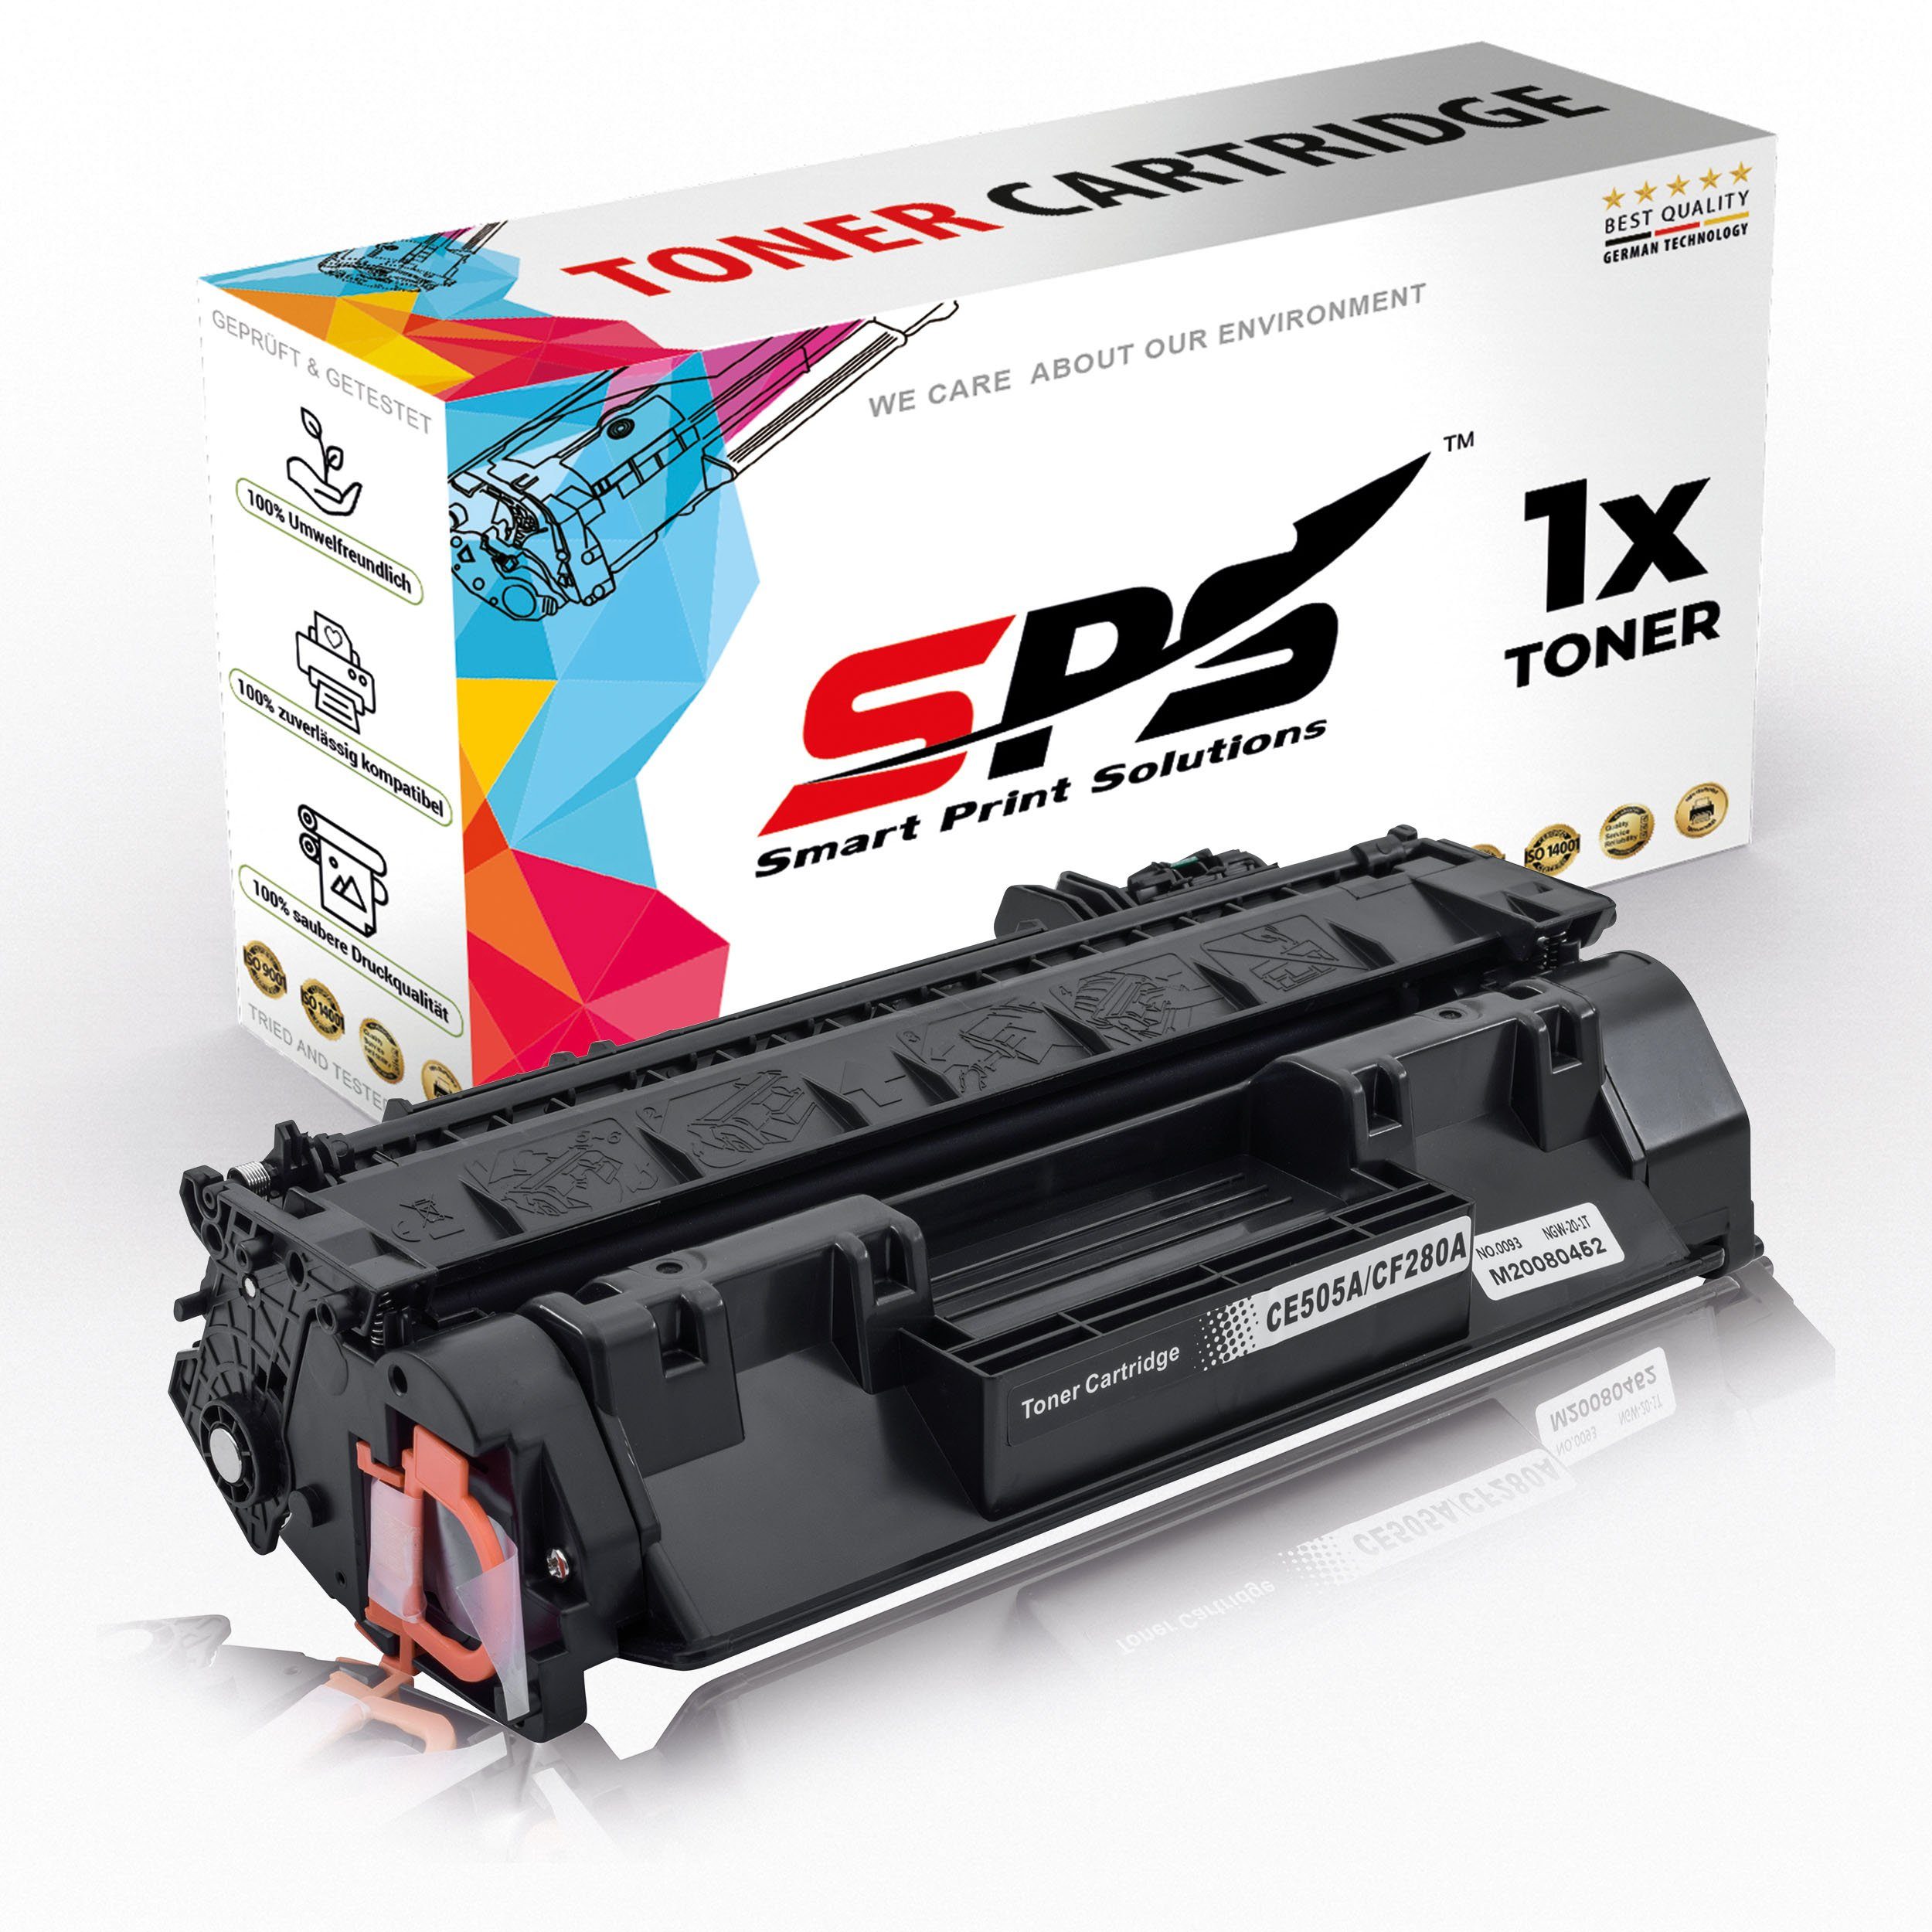 SPS Tonerkartusche Kompatibel für HP Laserjet Pro 400 MFP M425DW 80A, (1er Pack) | Tonerpatronen